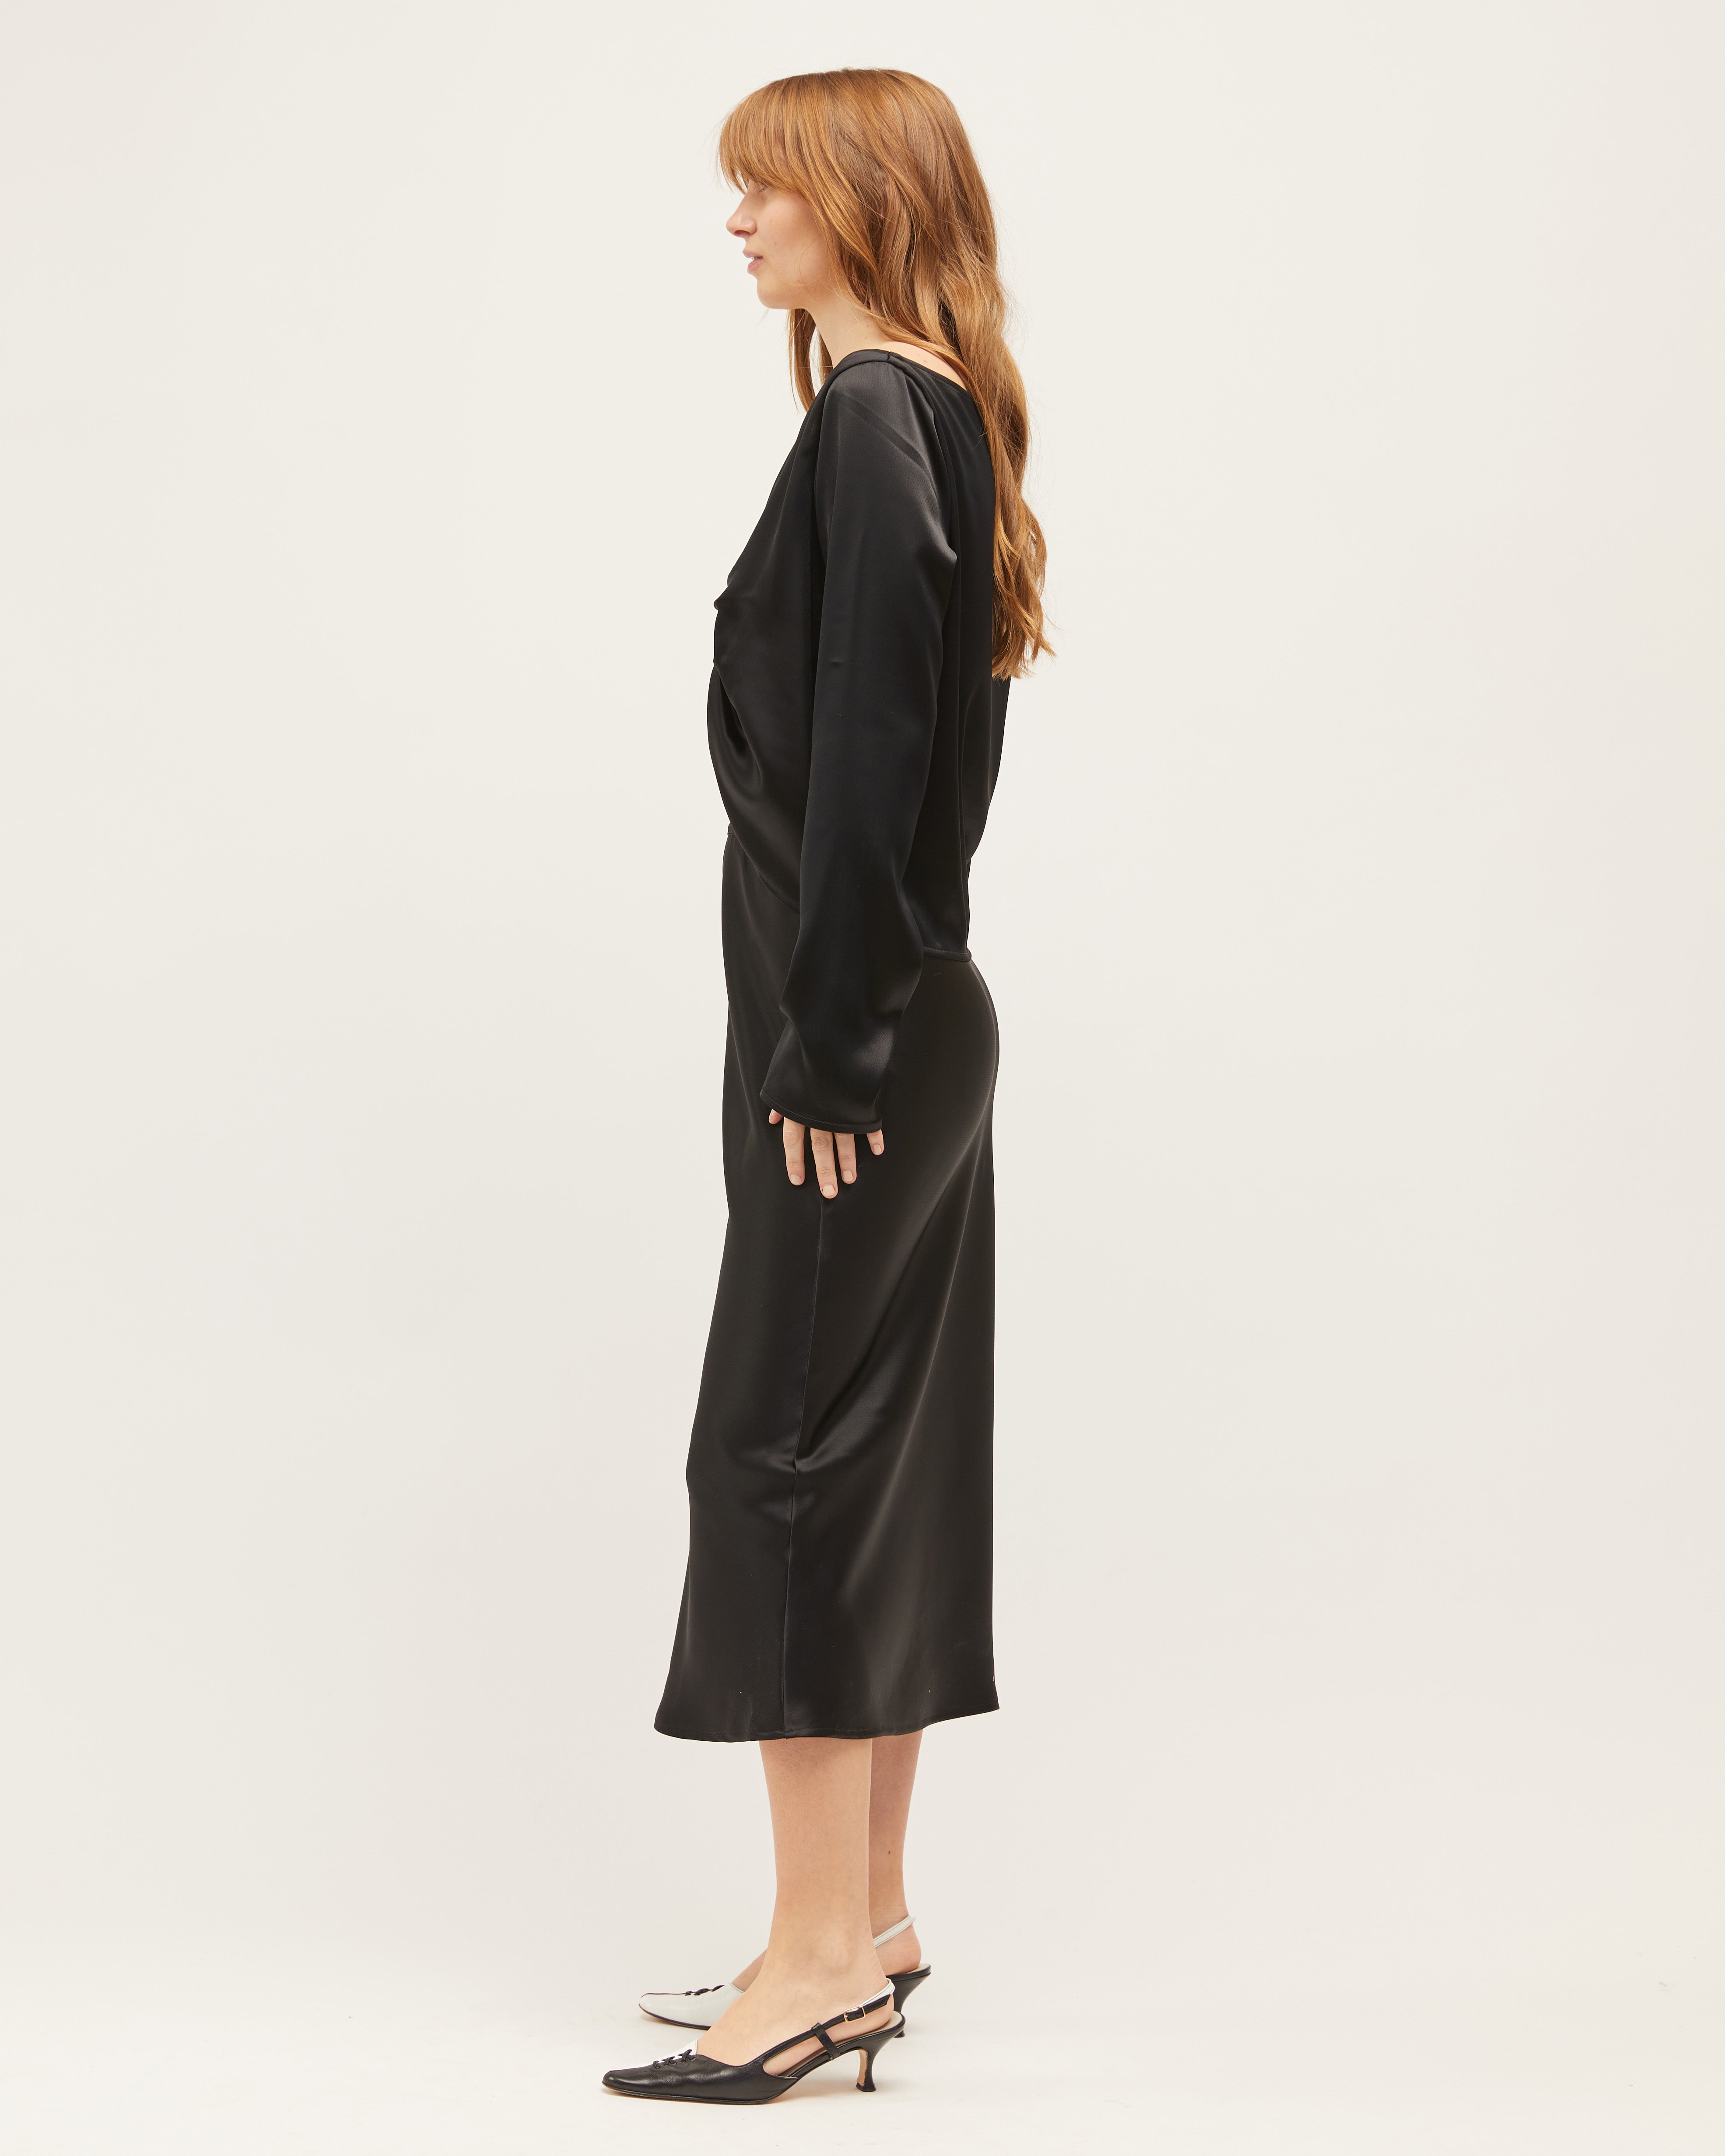 Harriet Bias Skirt | Black $255